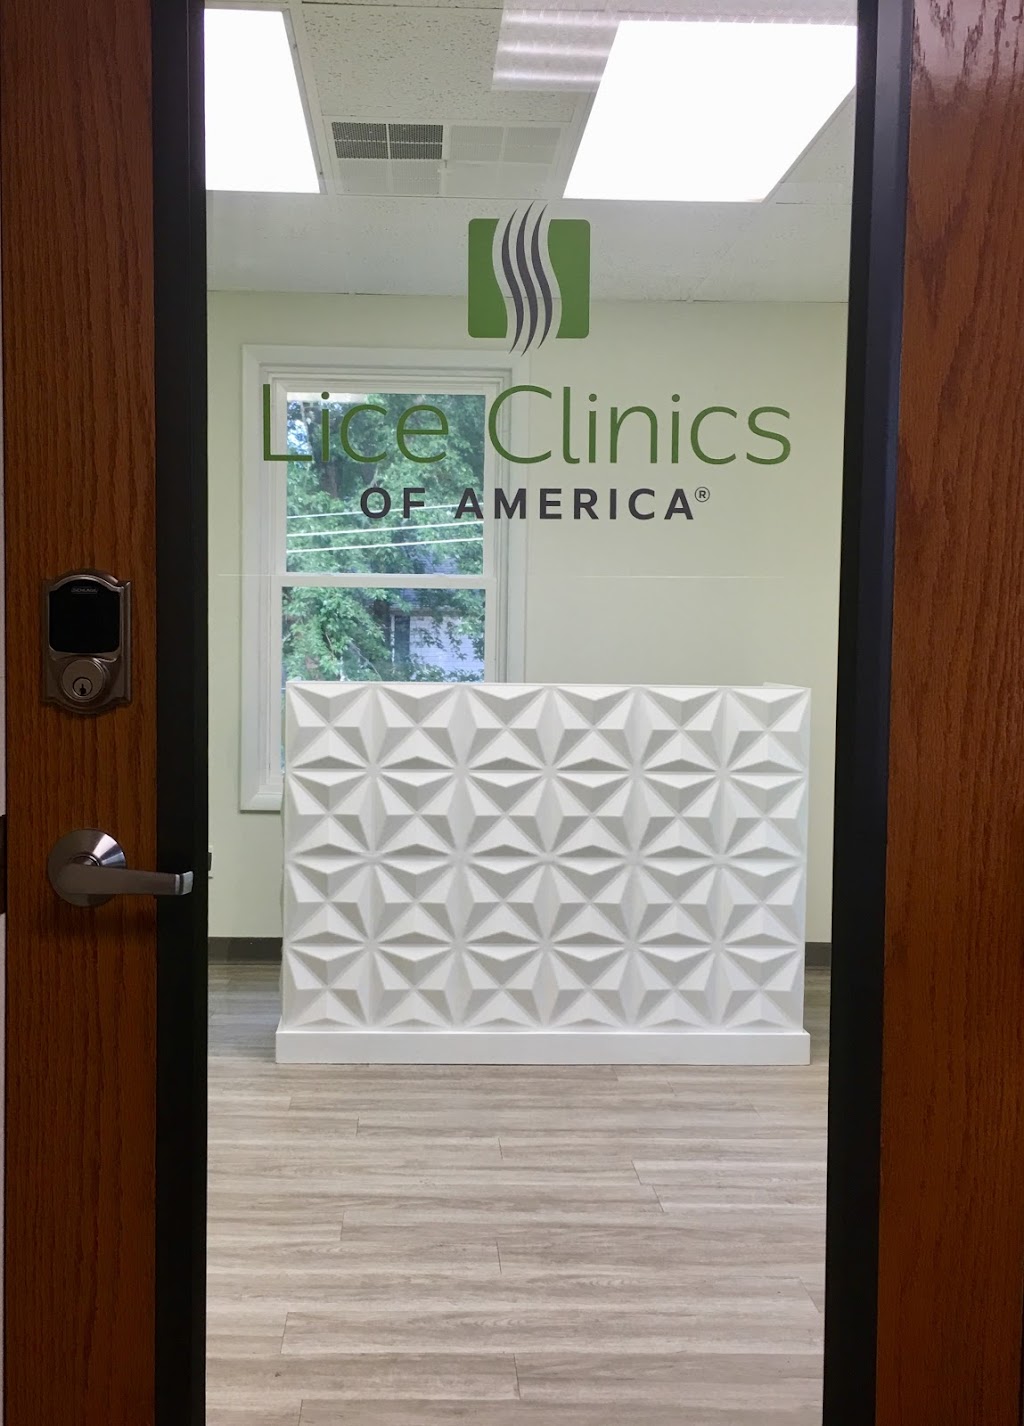 Lice Clinics of America - Bucks County | 275 S Main St #9, Doylestown, PA 18901 | Phone: (267) 930-5423